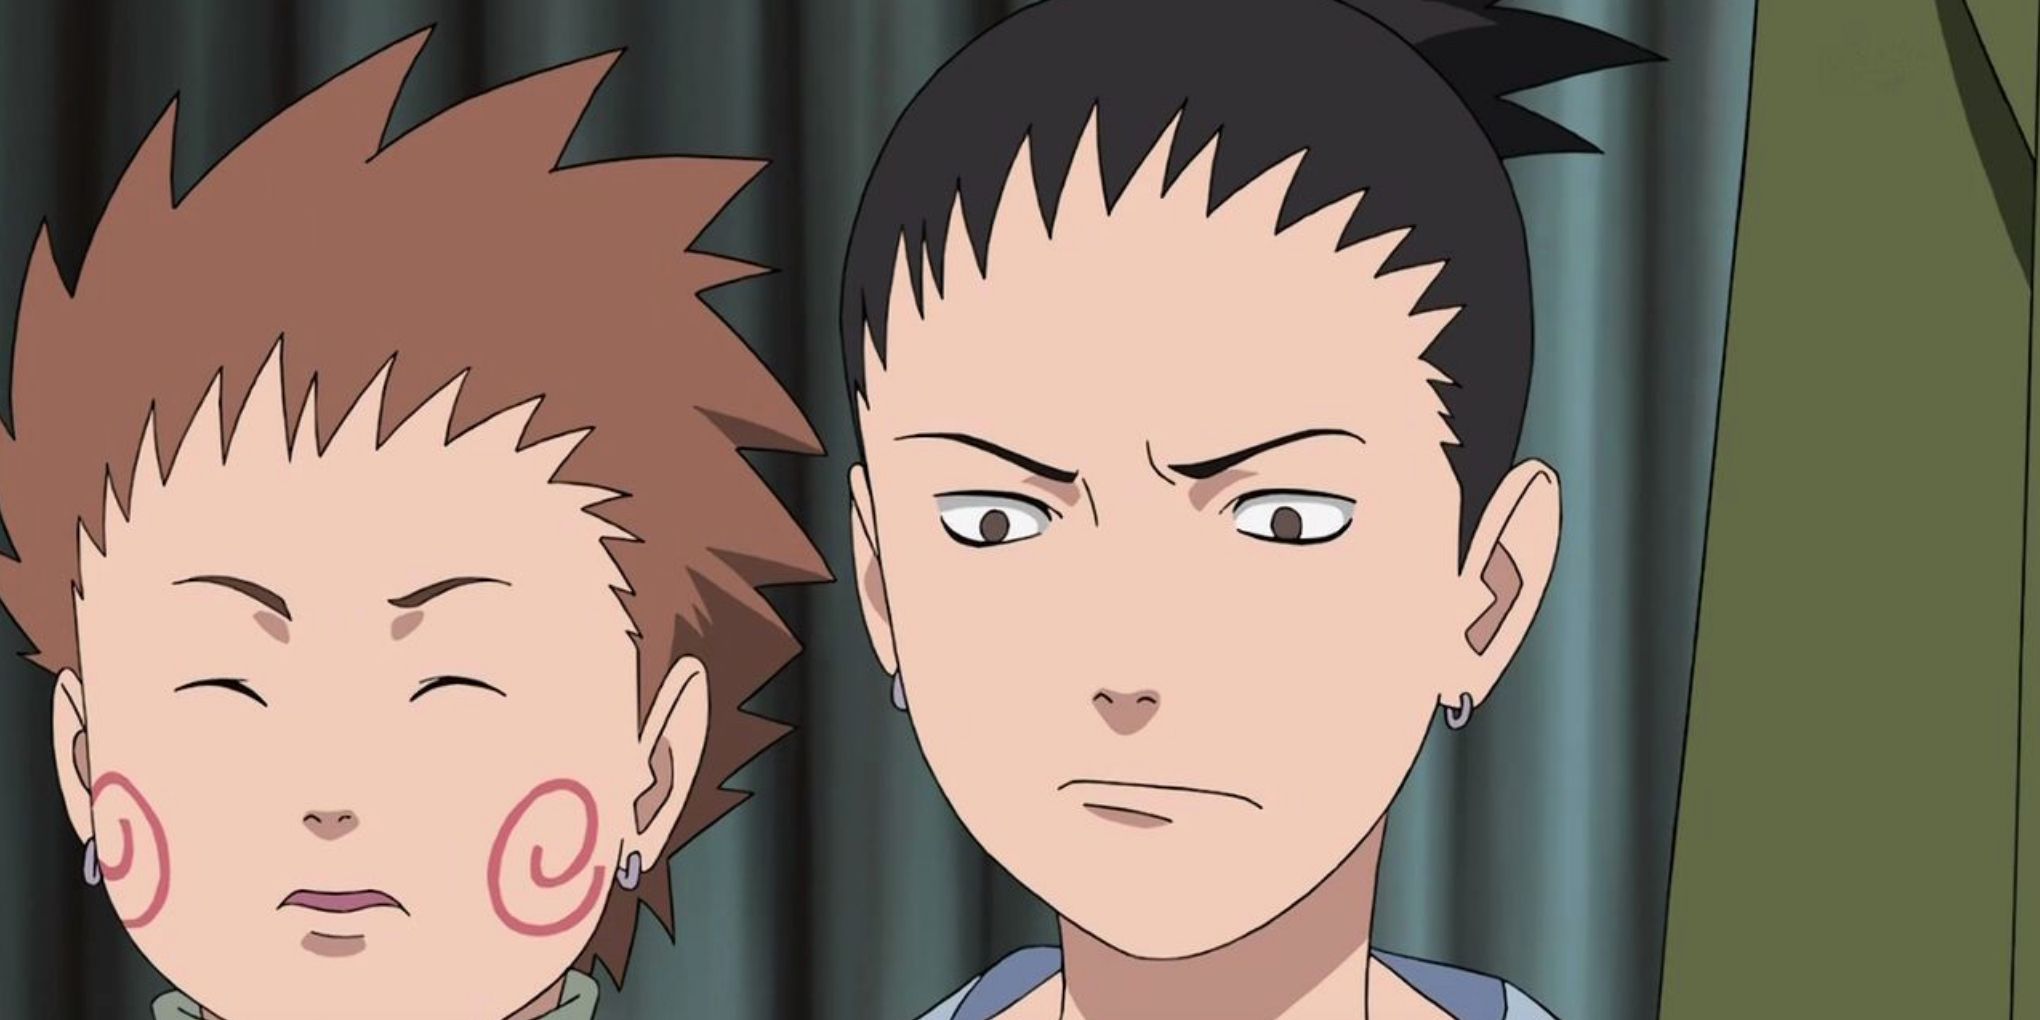 A young Choji and Shikamaru stand together in a Naruto flashback